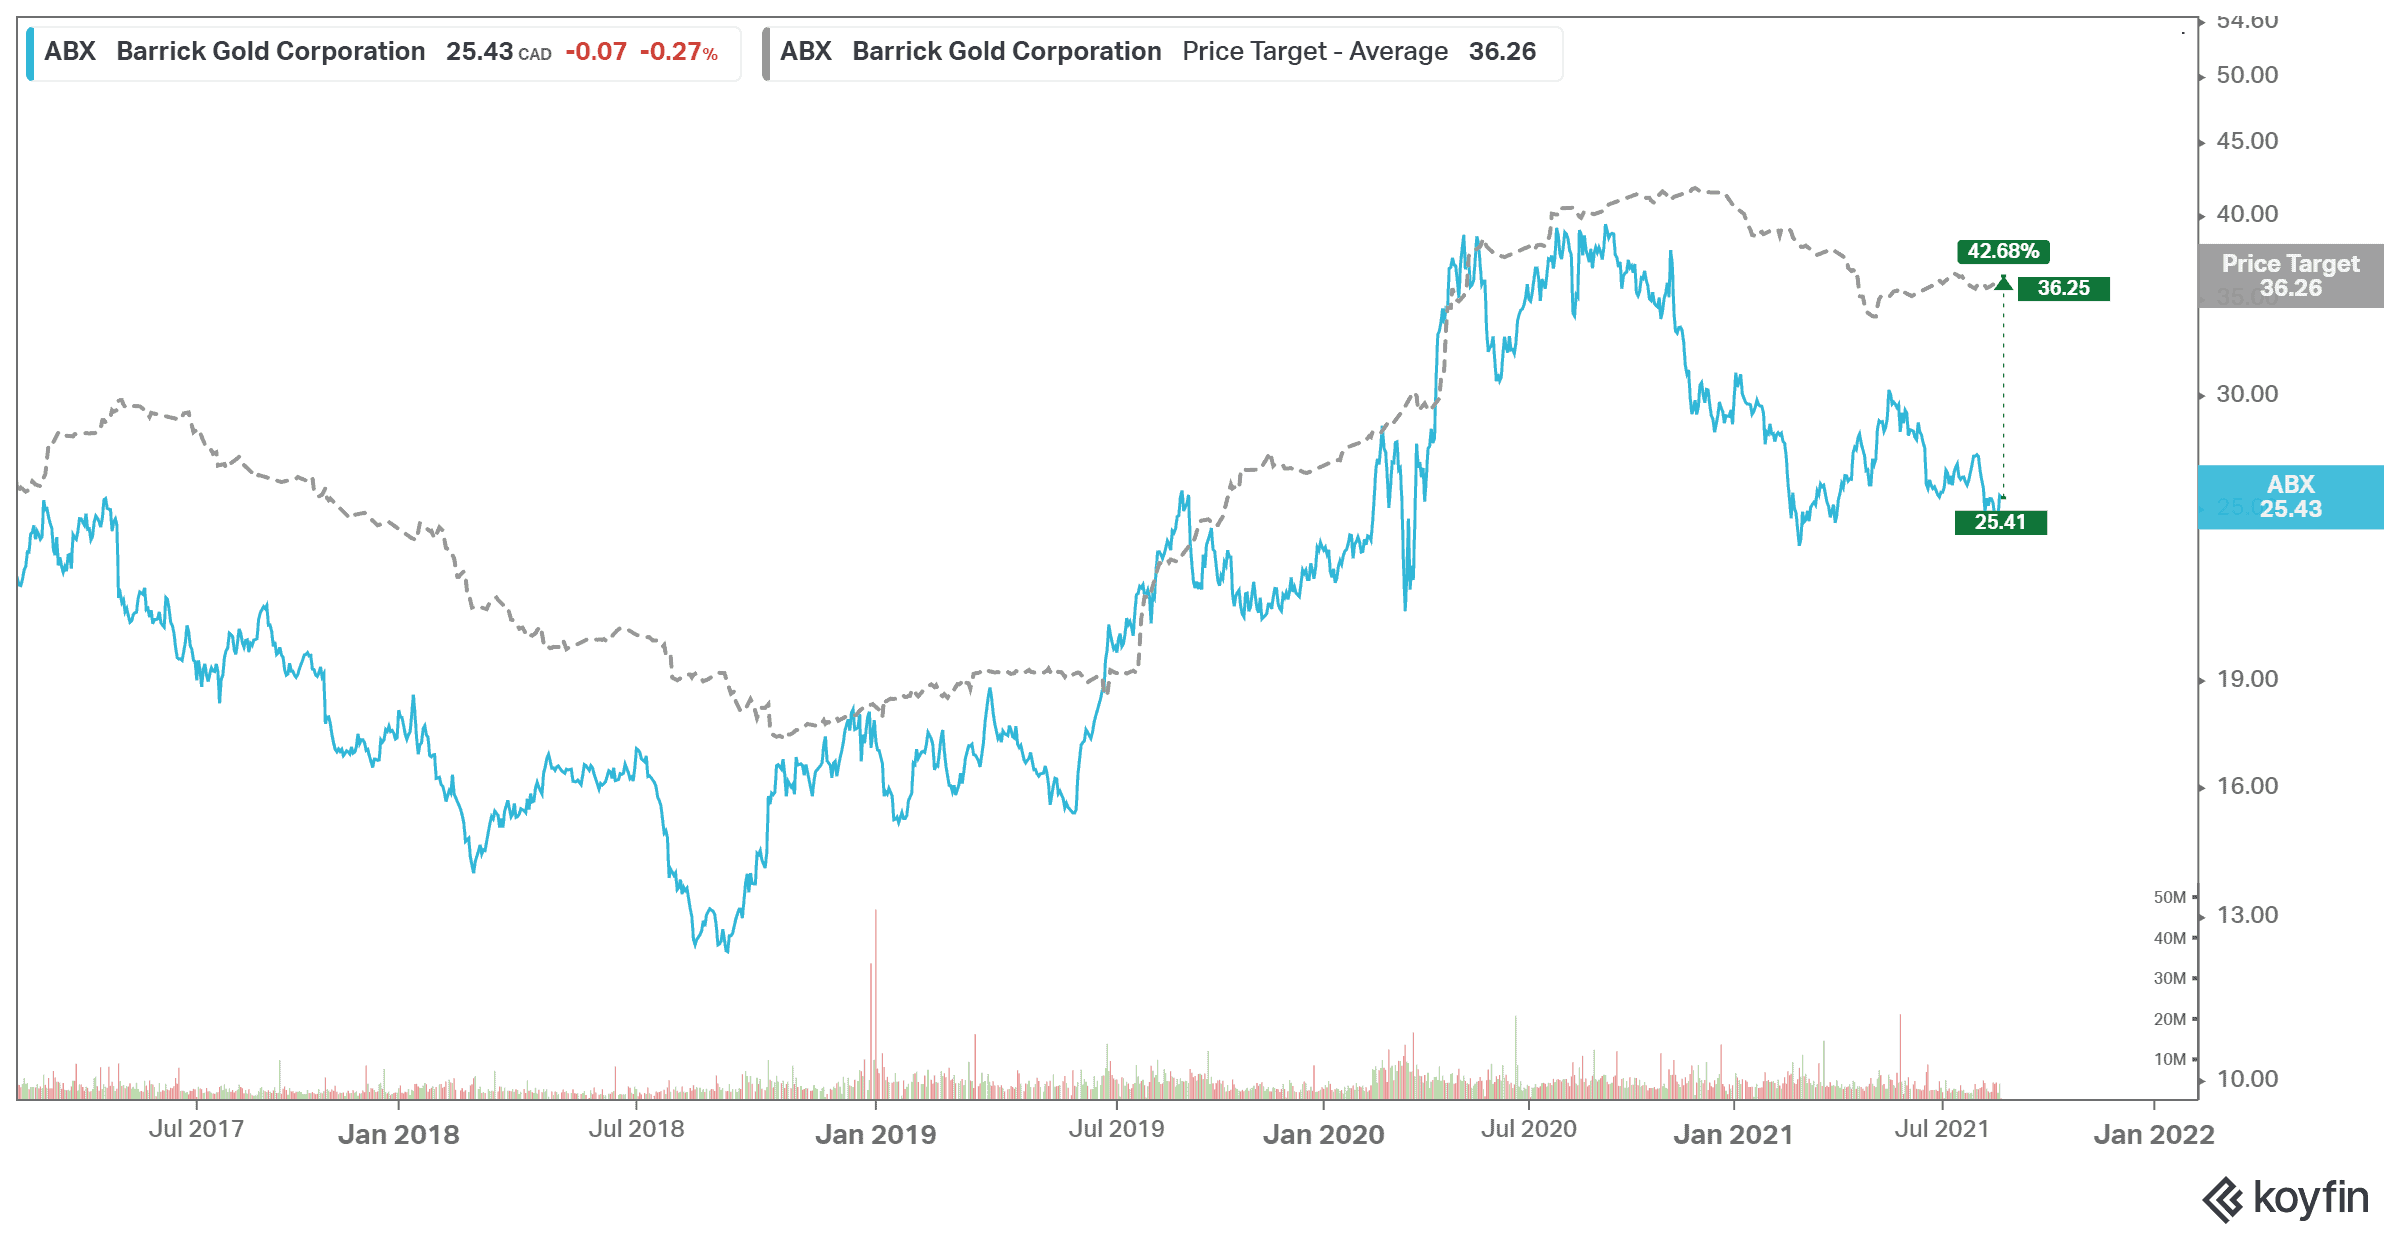 Barrick Gold stock price vs analyst targets